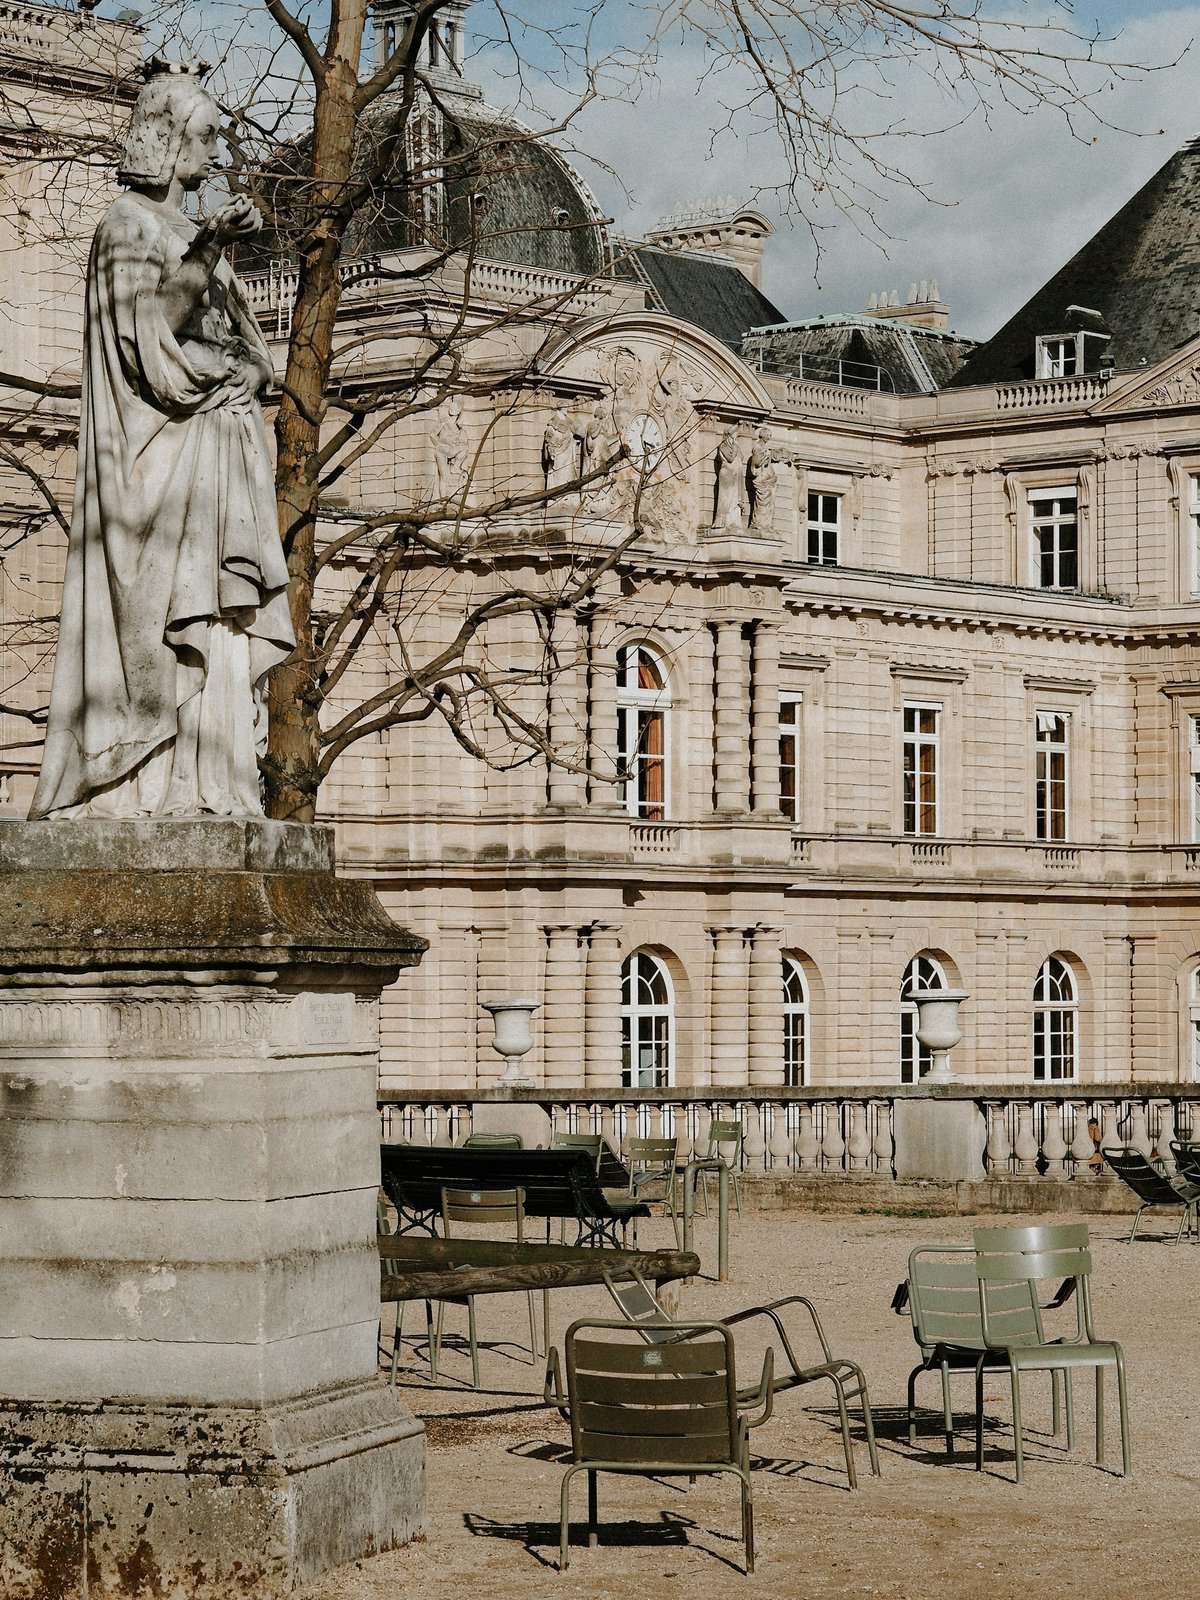 beautiful capture of jardin du luxembourg in paris